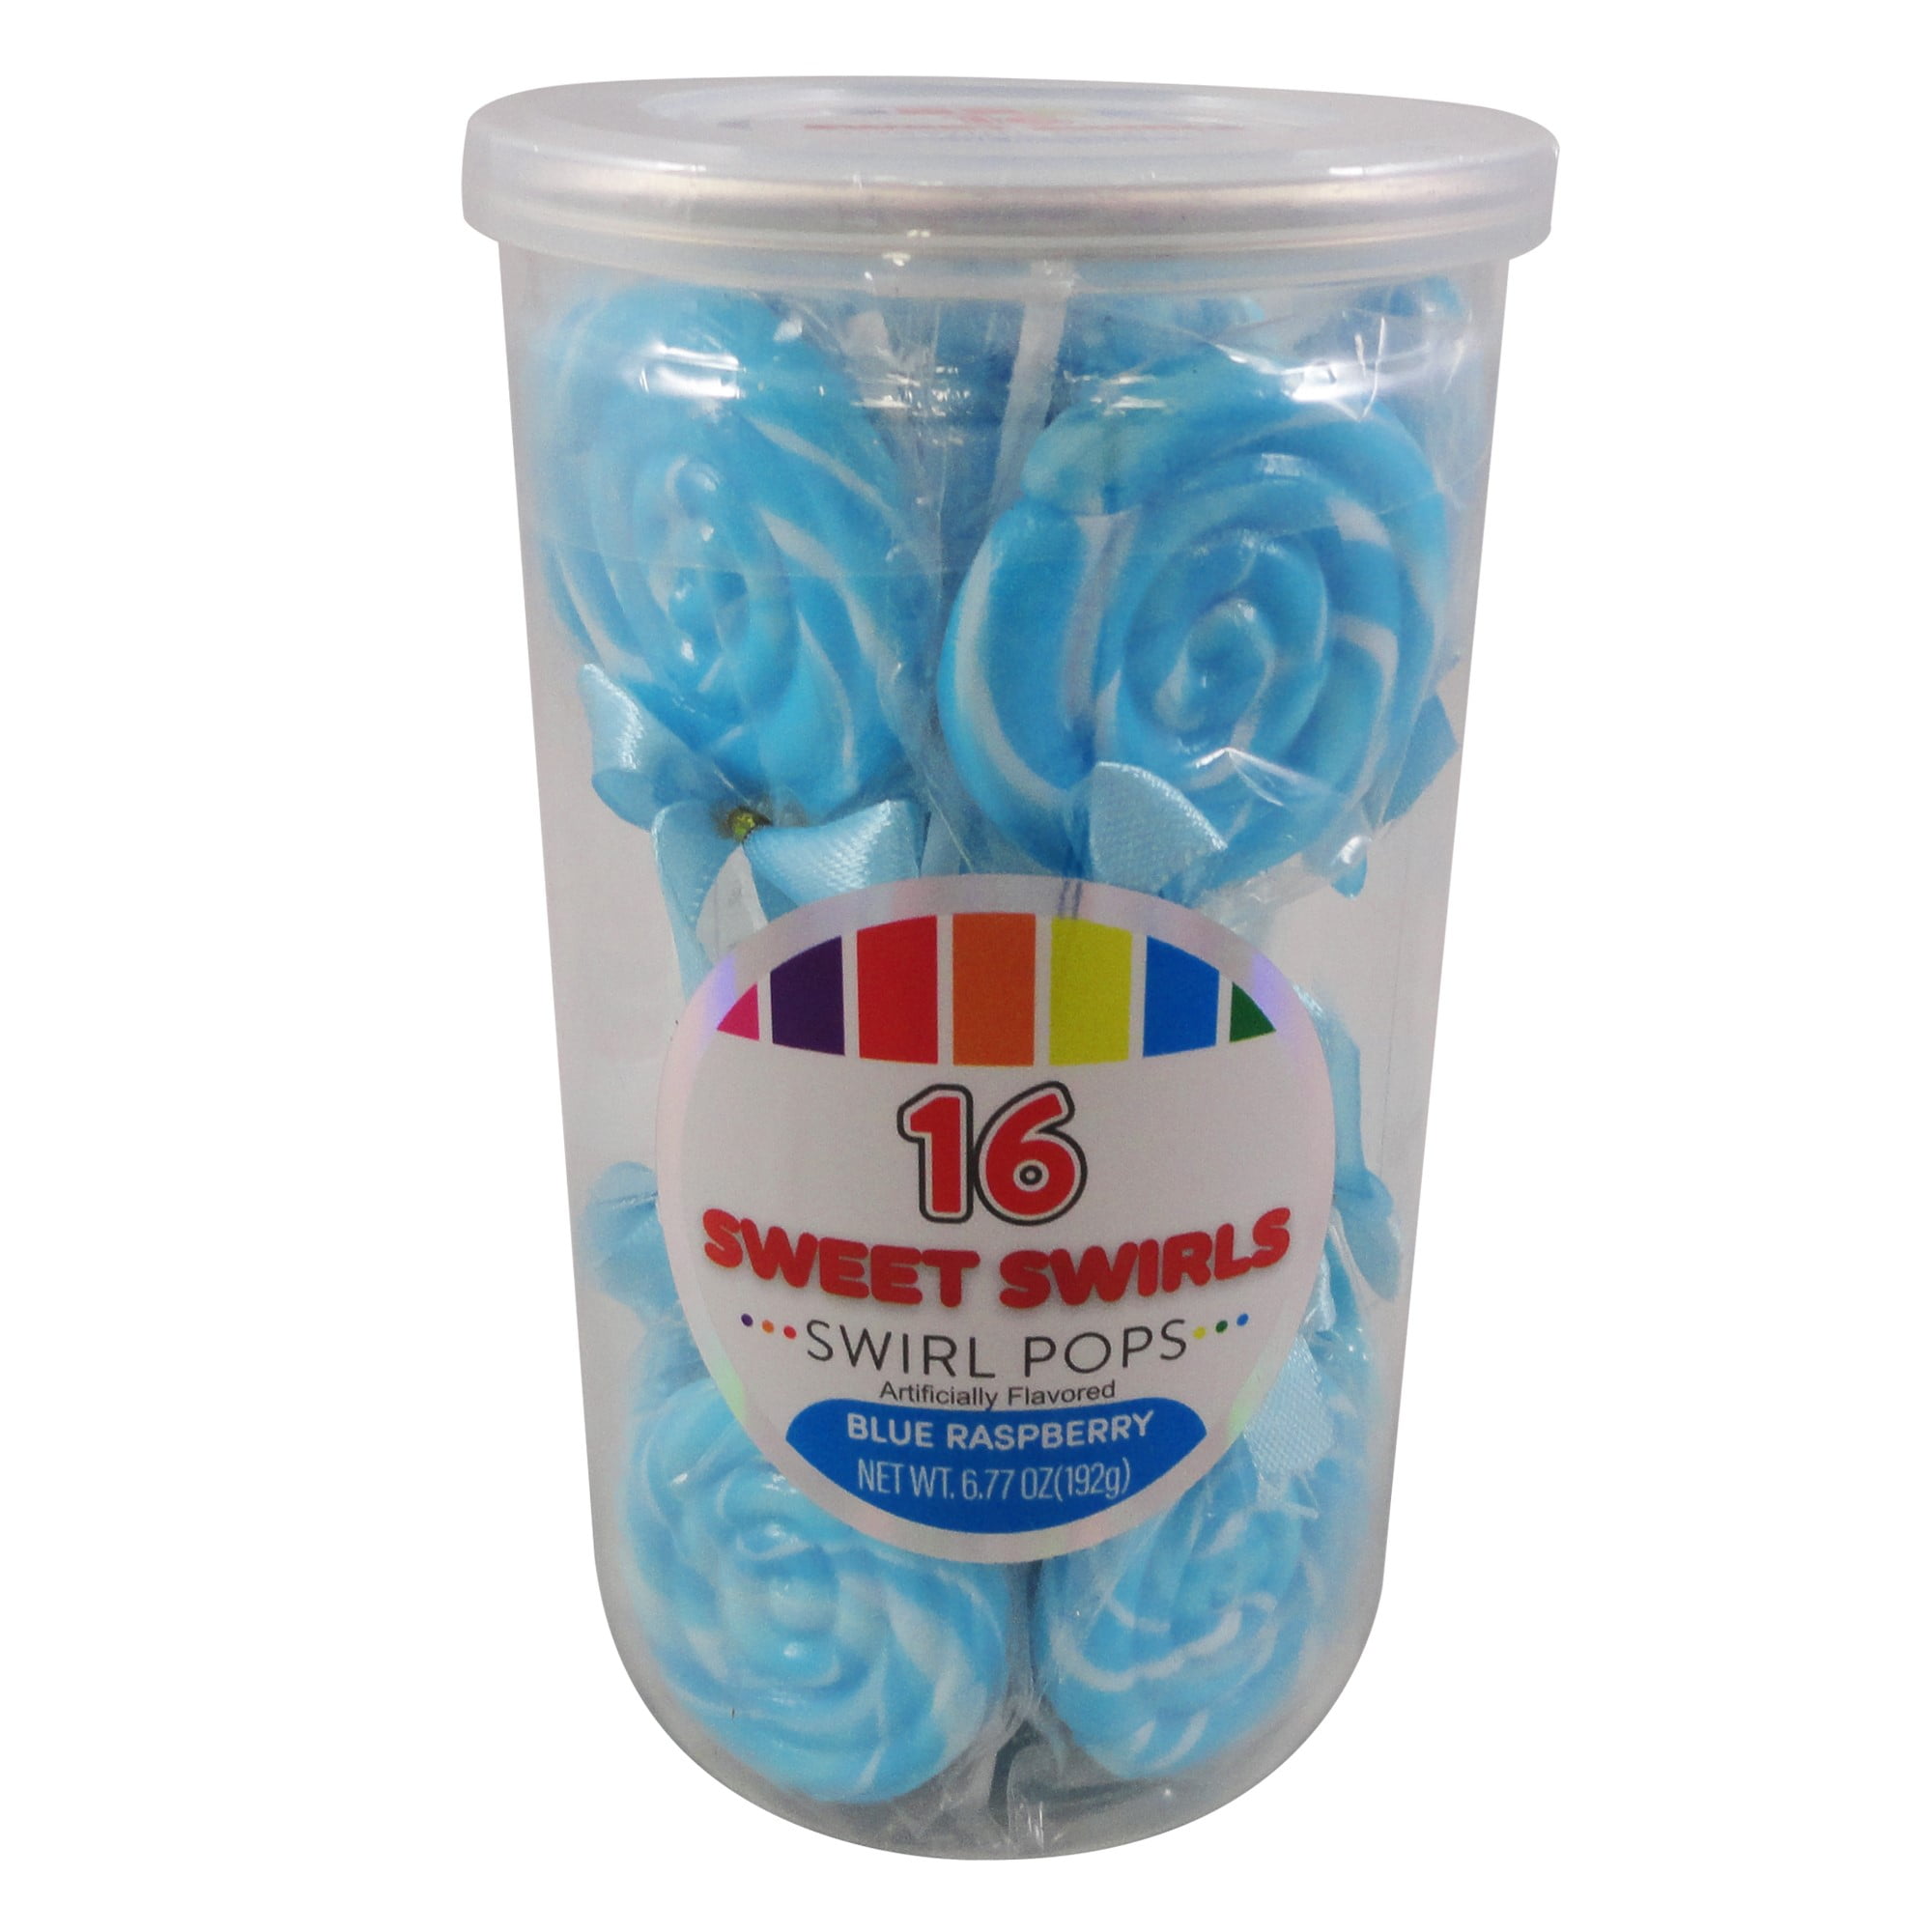 Celebrations Royal Blue Swirl Pops 16-ct Tub